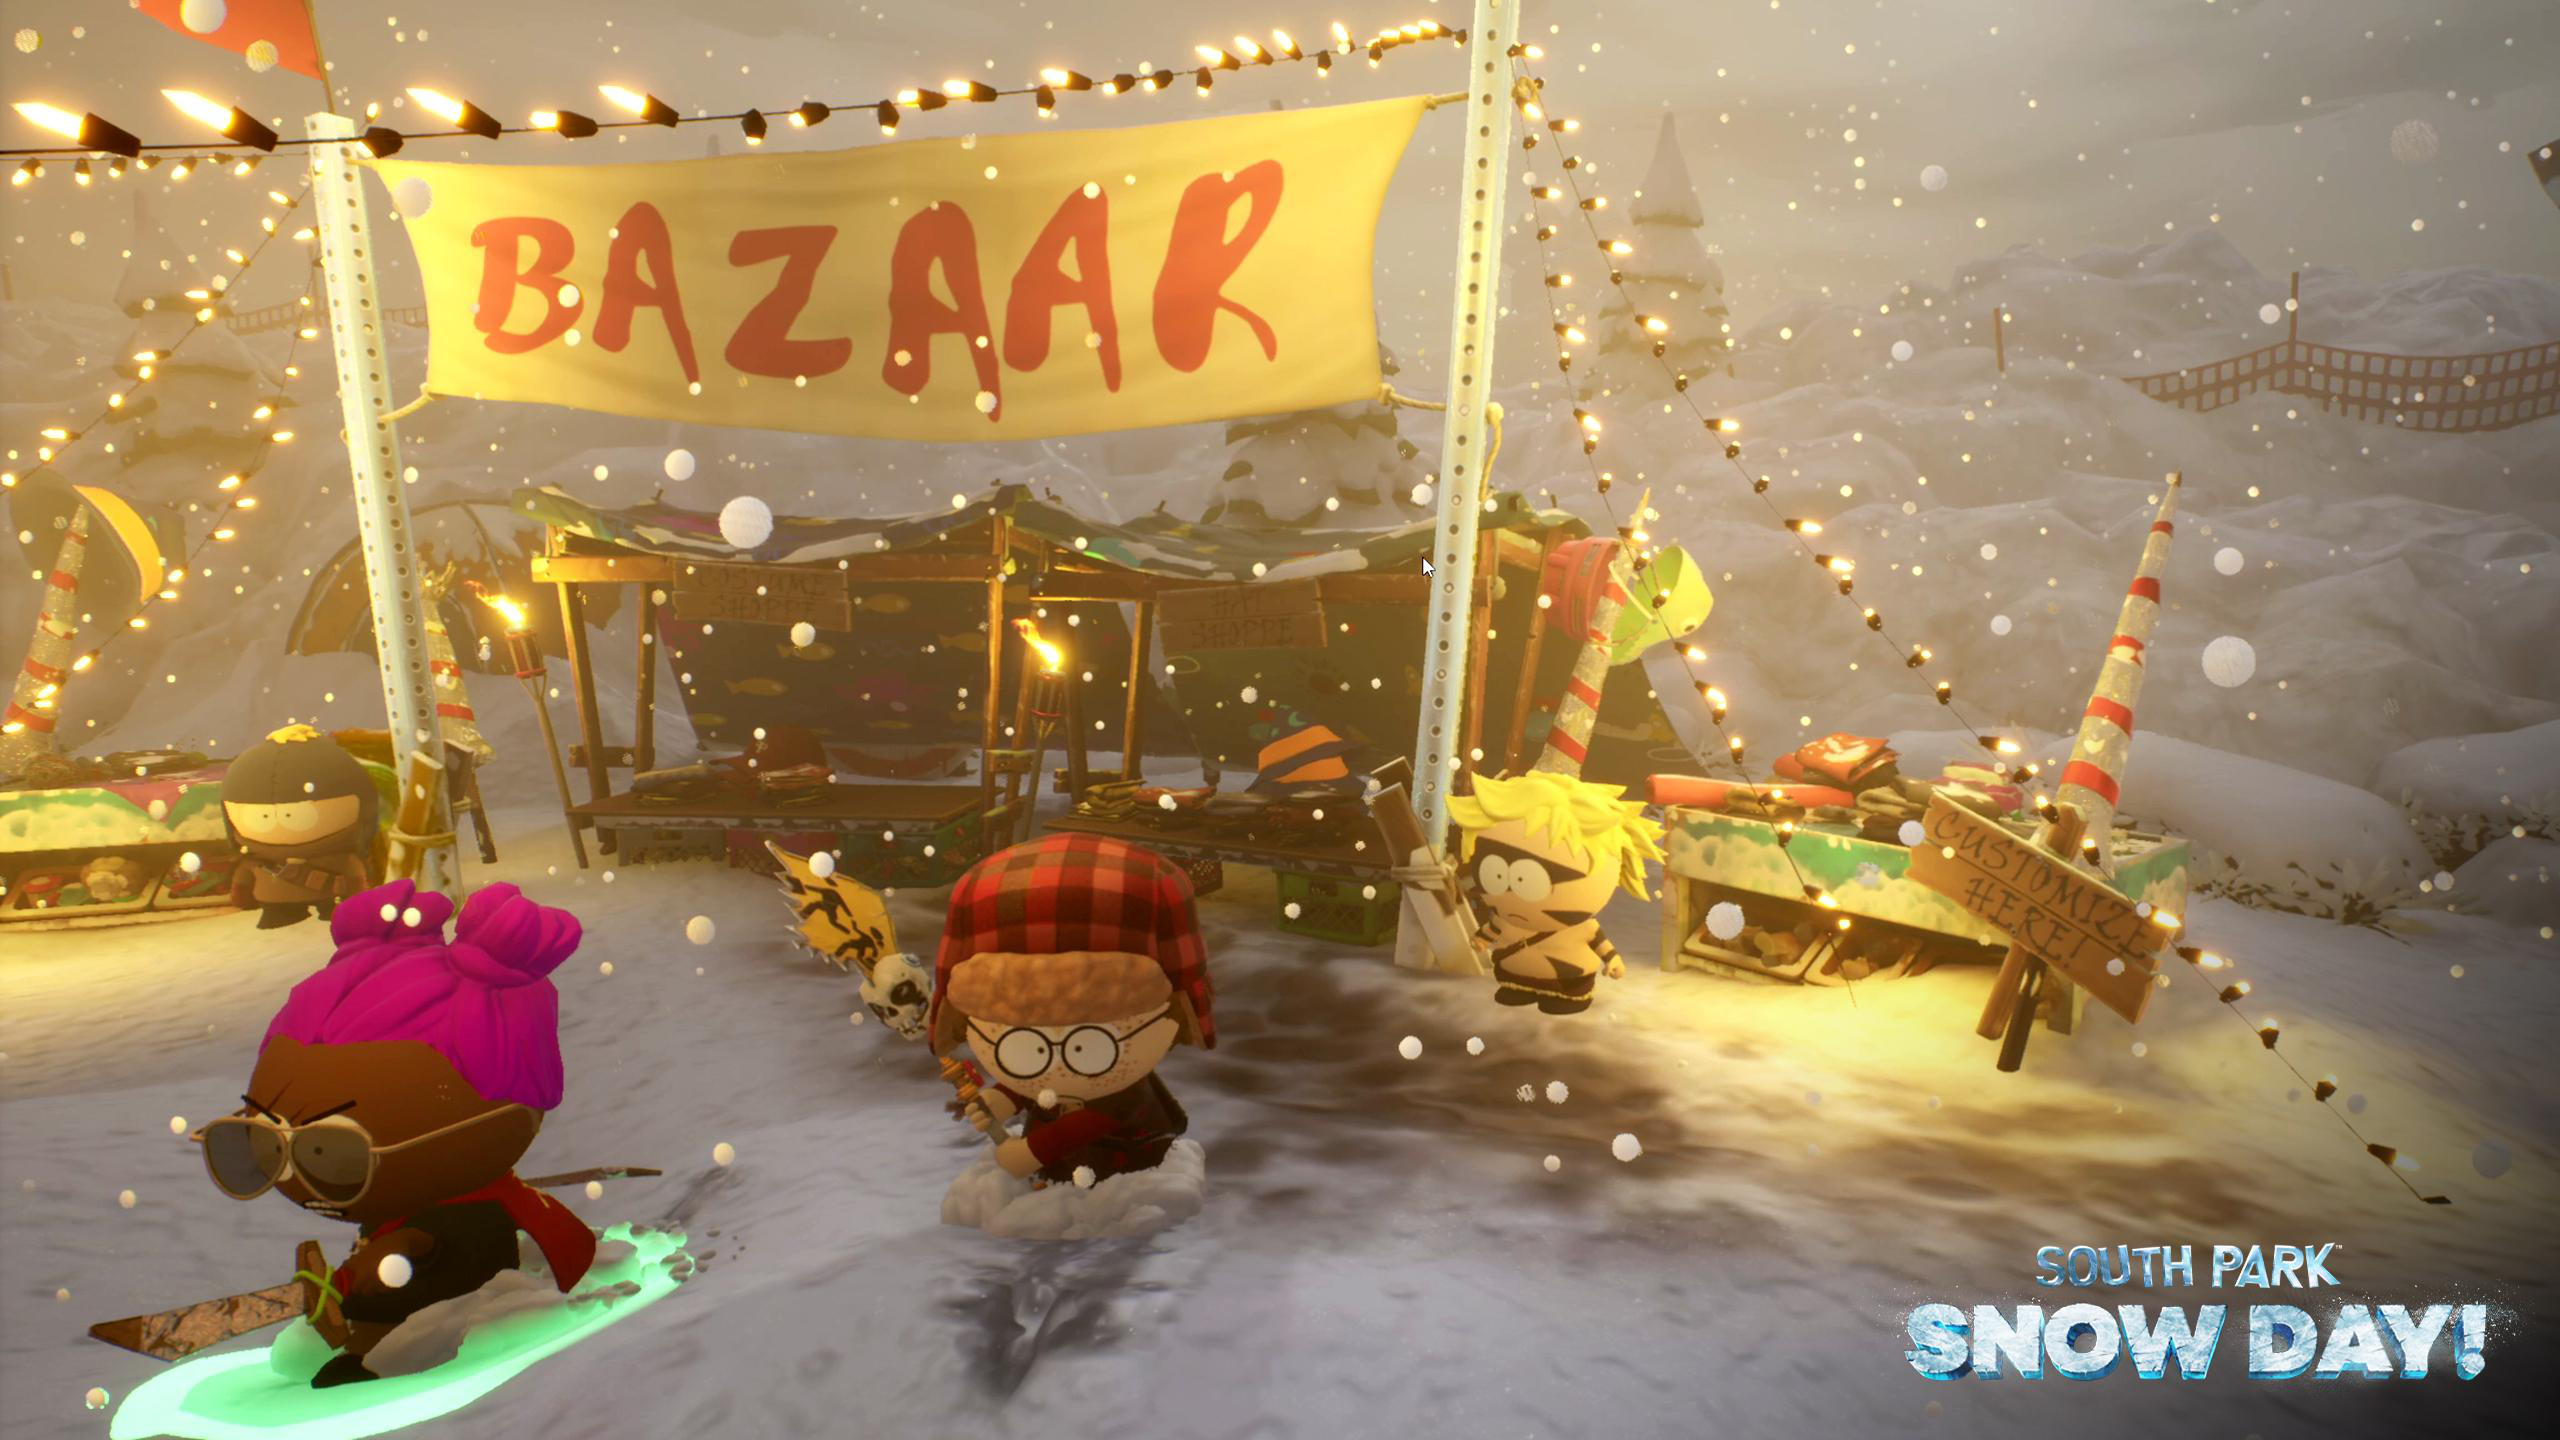 South Park: Snow Day! X] [Xbox - Series